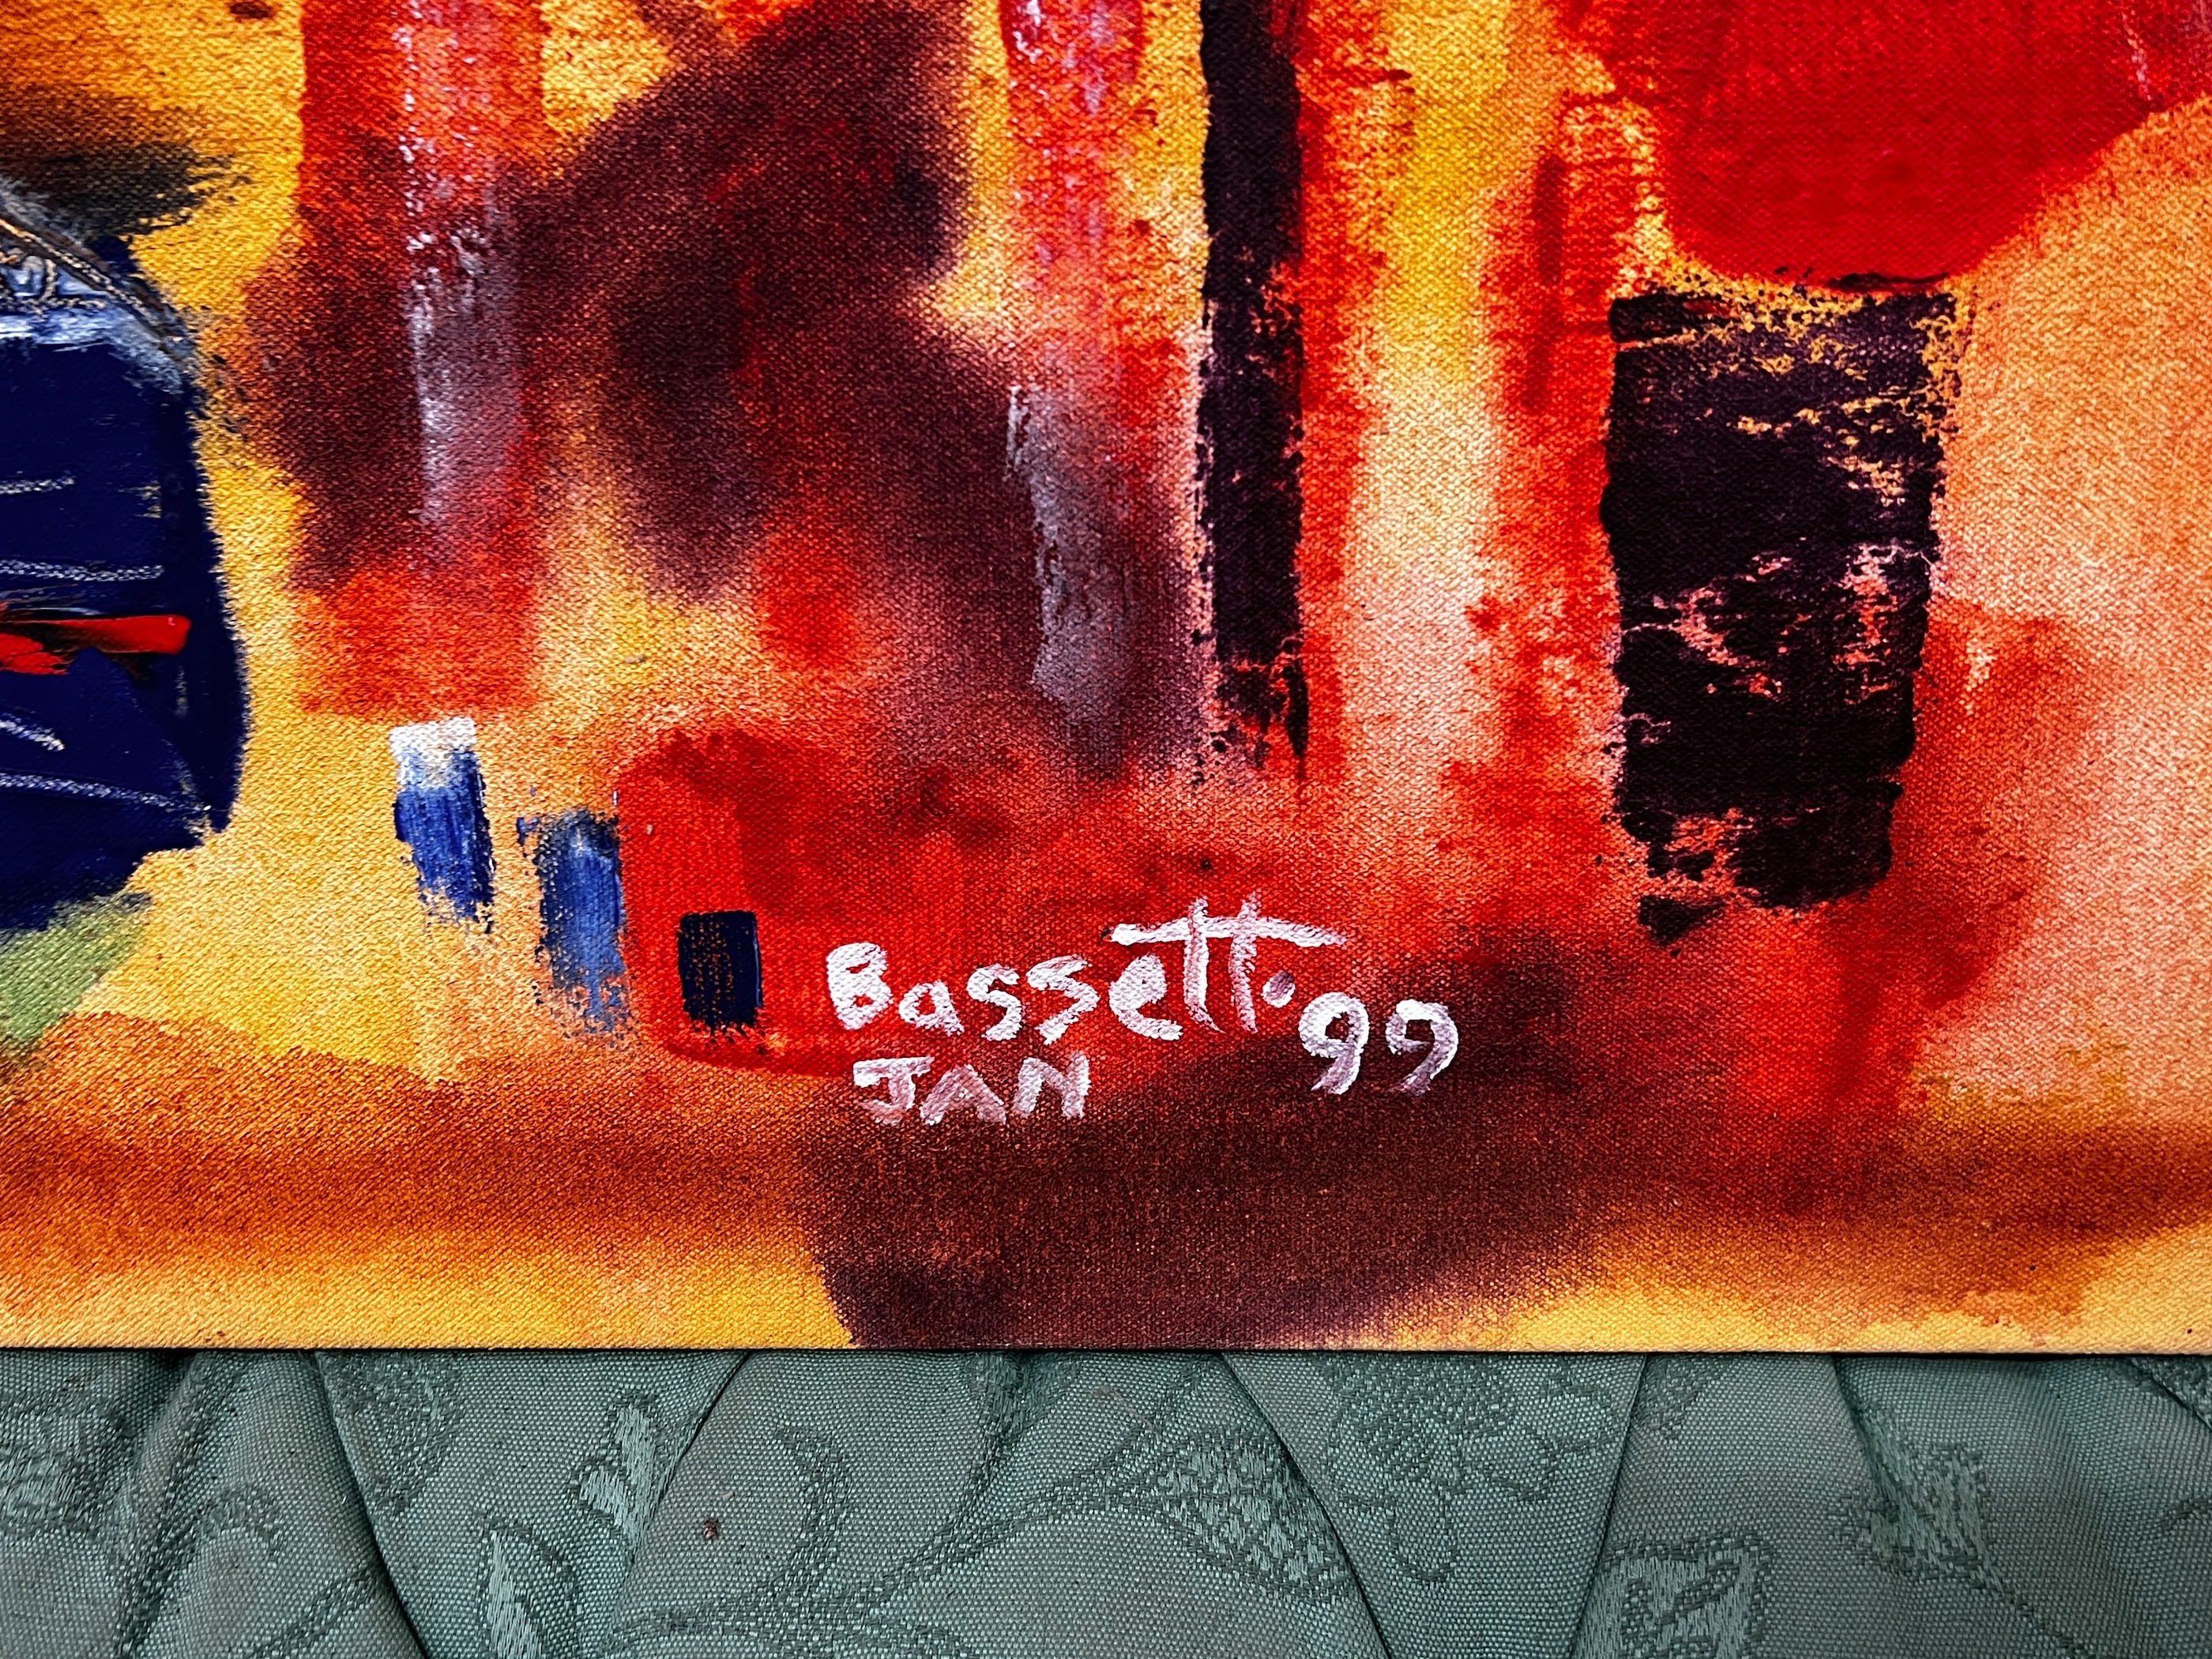 Bassett (modern British) - oil on canvas, Abstract city scene, 114 x 88cm - Image 2 of 2